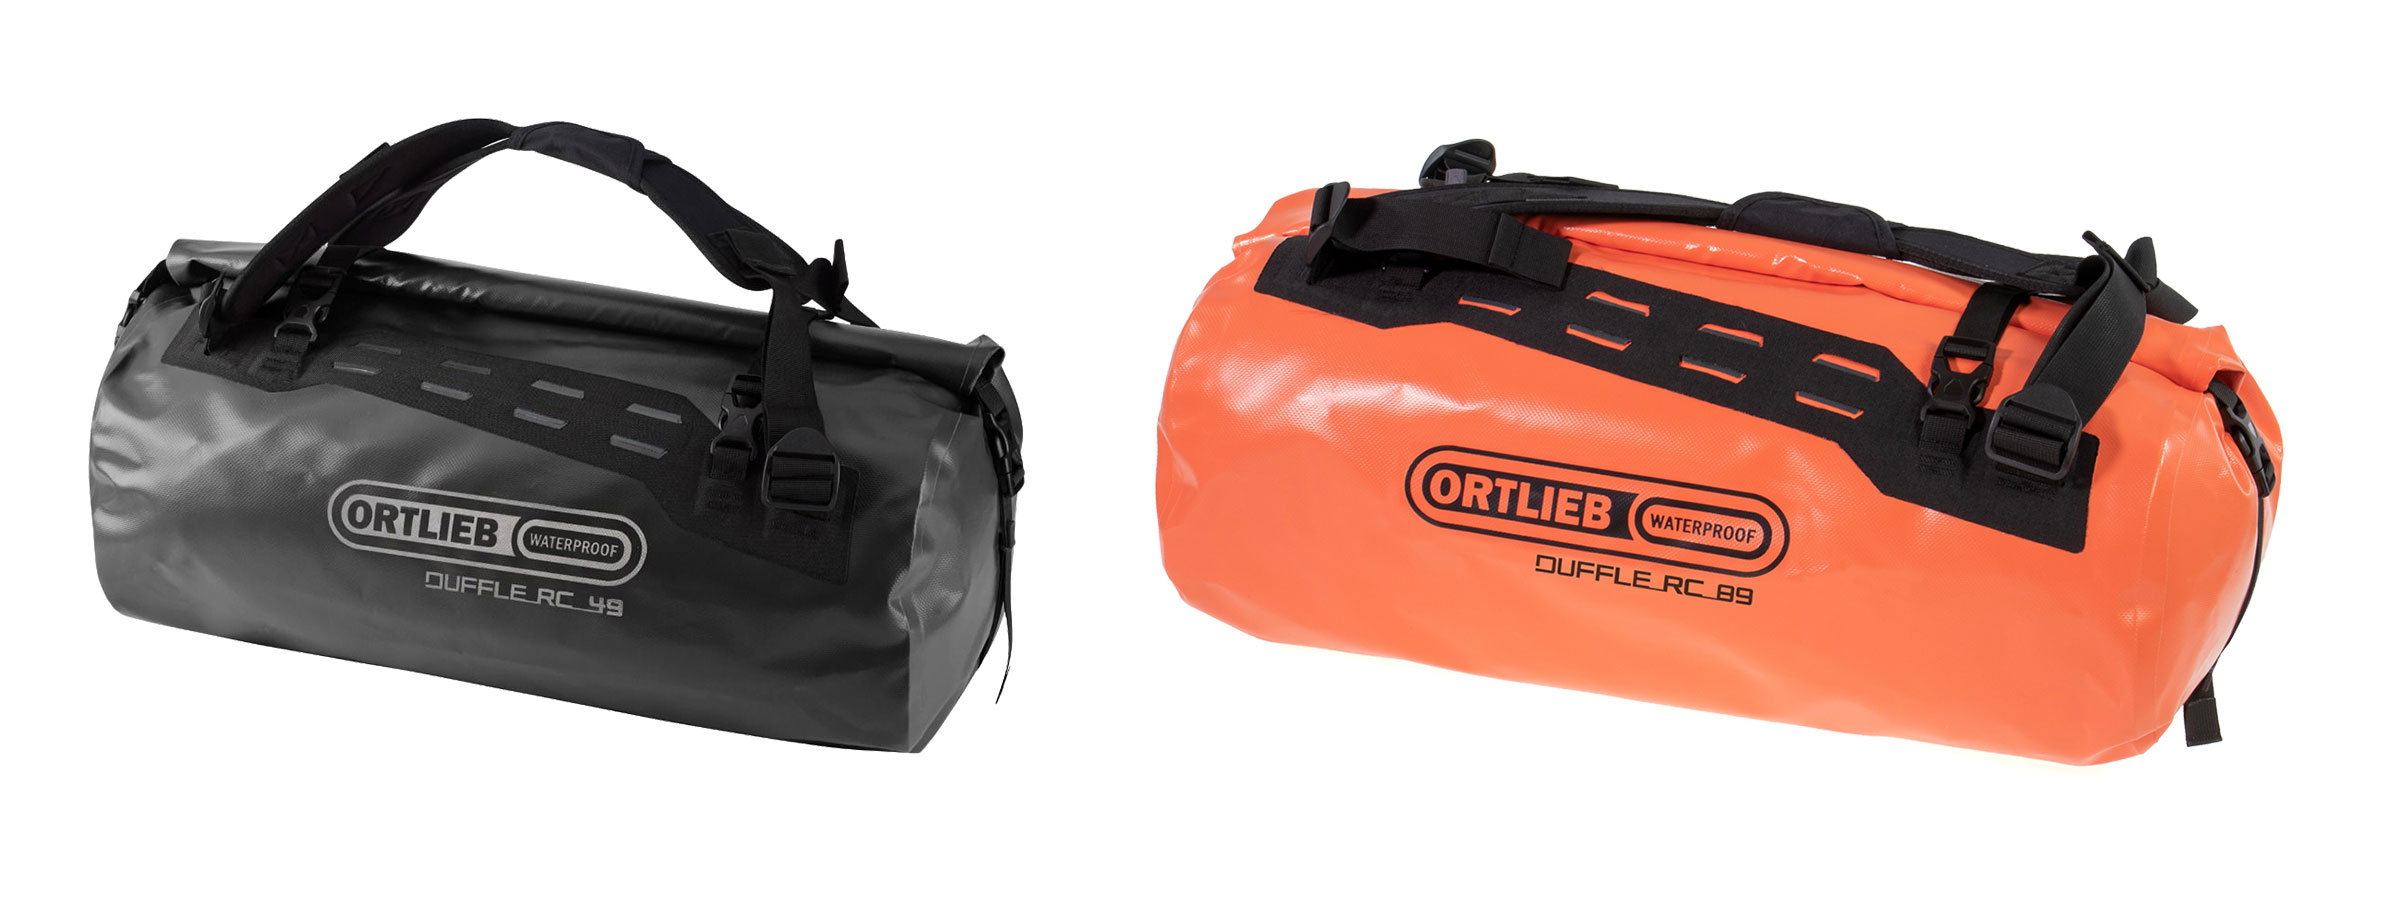 Ortlieb Duffle RC roll-top closure waterproof dufflebag backpack, made-in-Germany, black, olive or coral